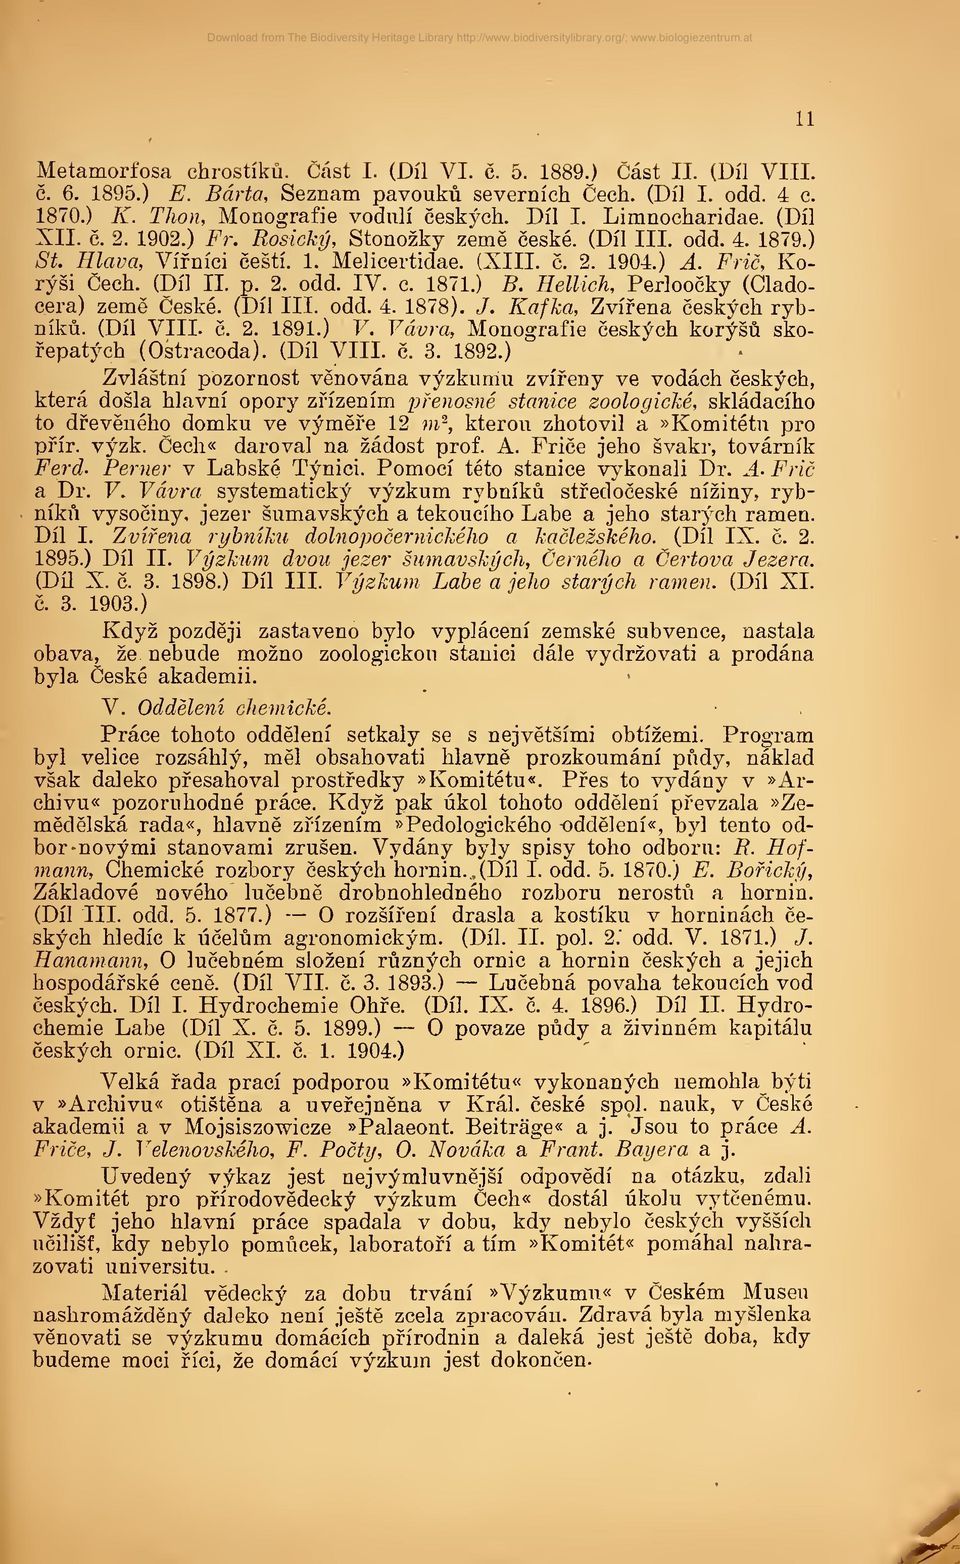 ) St. Elana, Vifnici cesti. 1. Melicertidae. (XIII. c. 2. 1904.) A. Fric, Korysi Cech. (Dil II. p. 2. odd. IV. e. 1871.) B. Hellich, Perloocky (Cladocera) zeme Ceske. (Dil III. odd. 4. 1878). J.